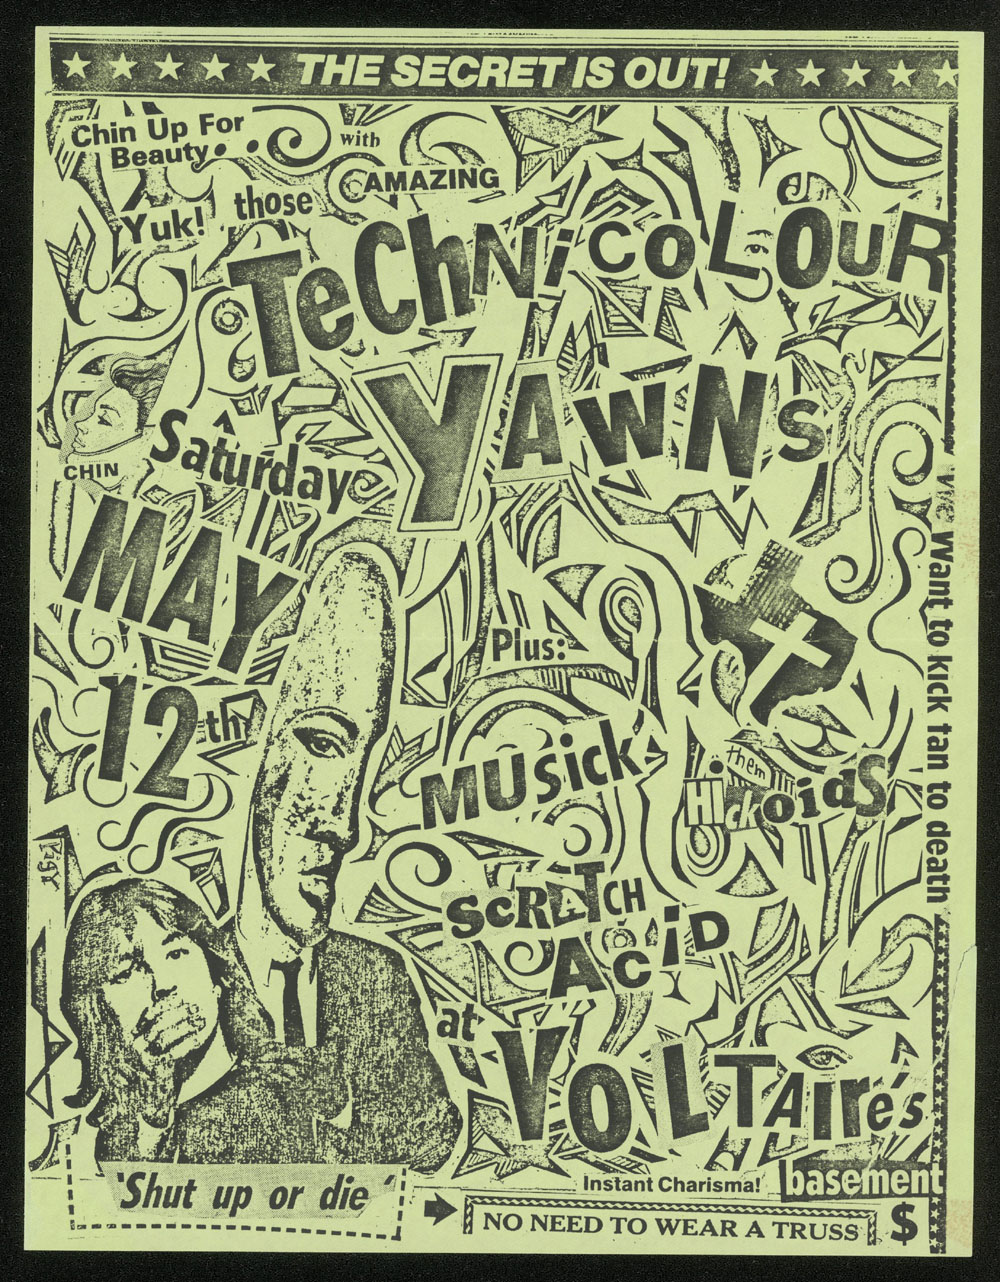 TECHNICOLOUR YAWNS w/ Scratch Acid, Musick, Hickoids at Voltaire's Basement